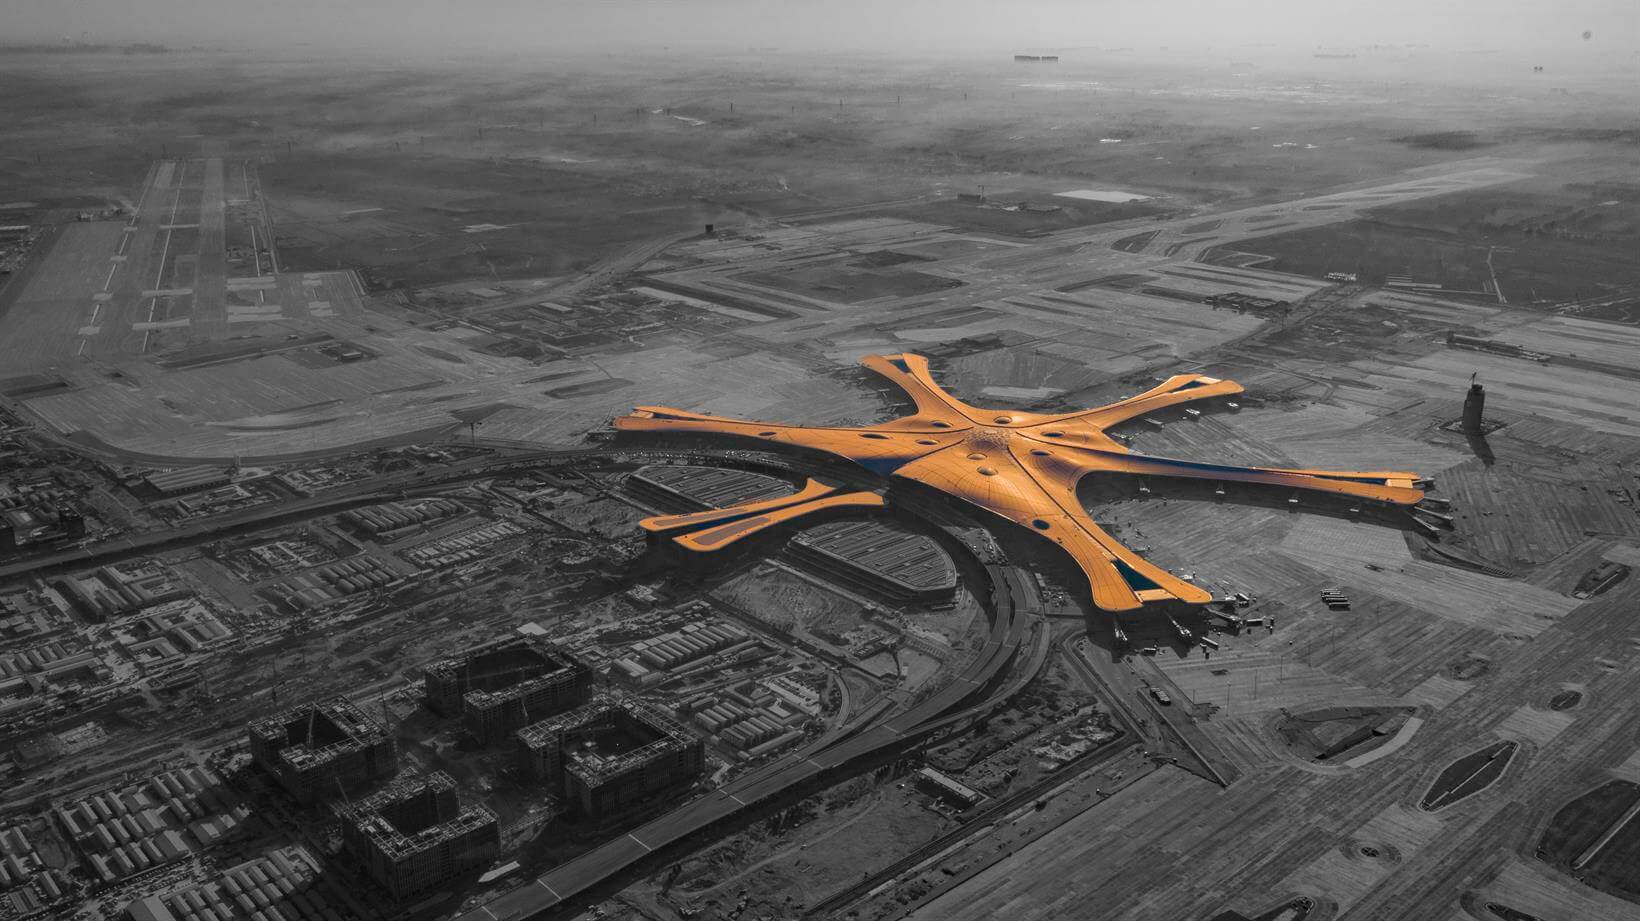 Vista aérea do Aeroporto Internacional de Beijing Daxing (PKX)